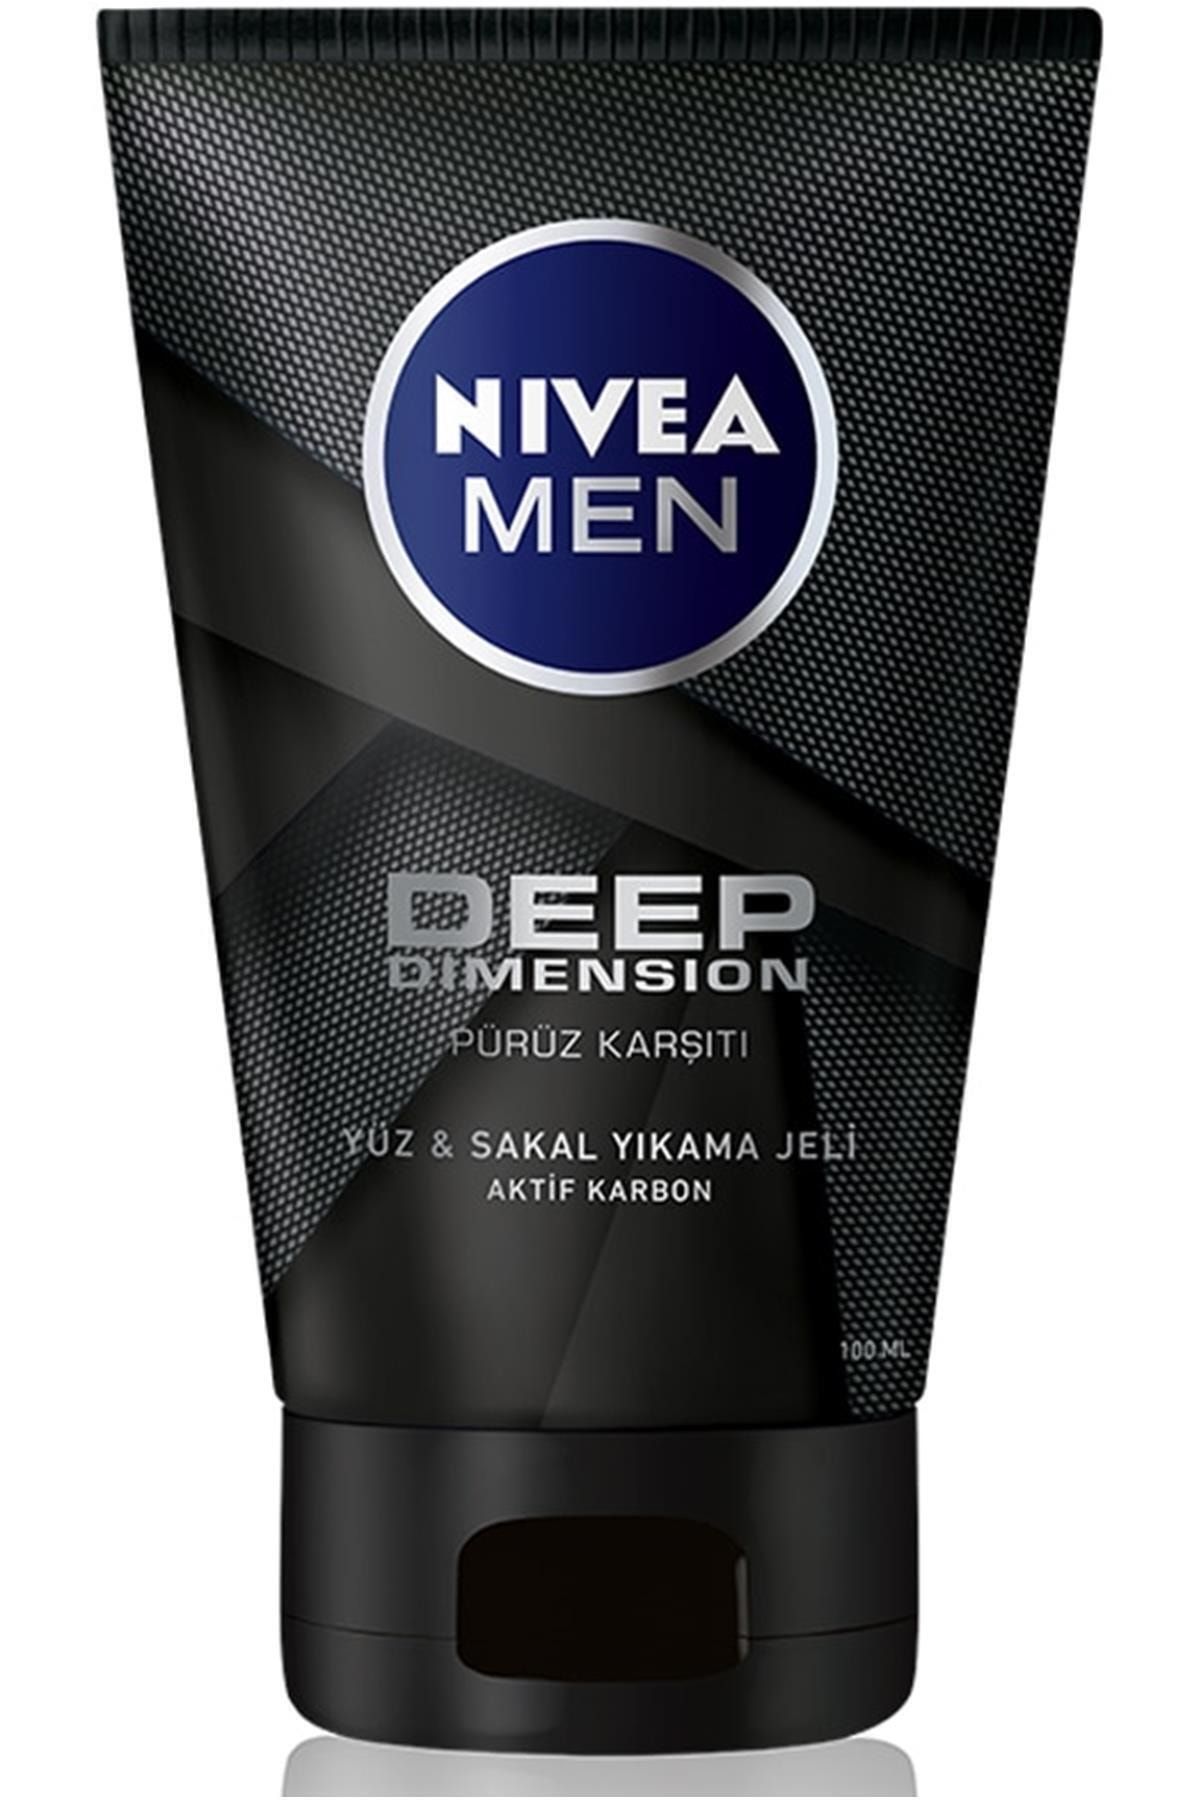 NIVEA ژل تمیزکننده چهره و ریش مردانه ضد خش و ضد حساسیت 100 میلی لیتر